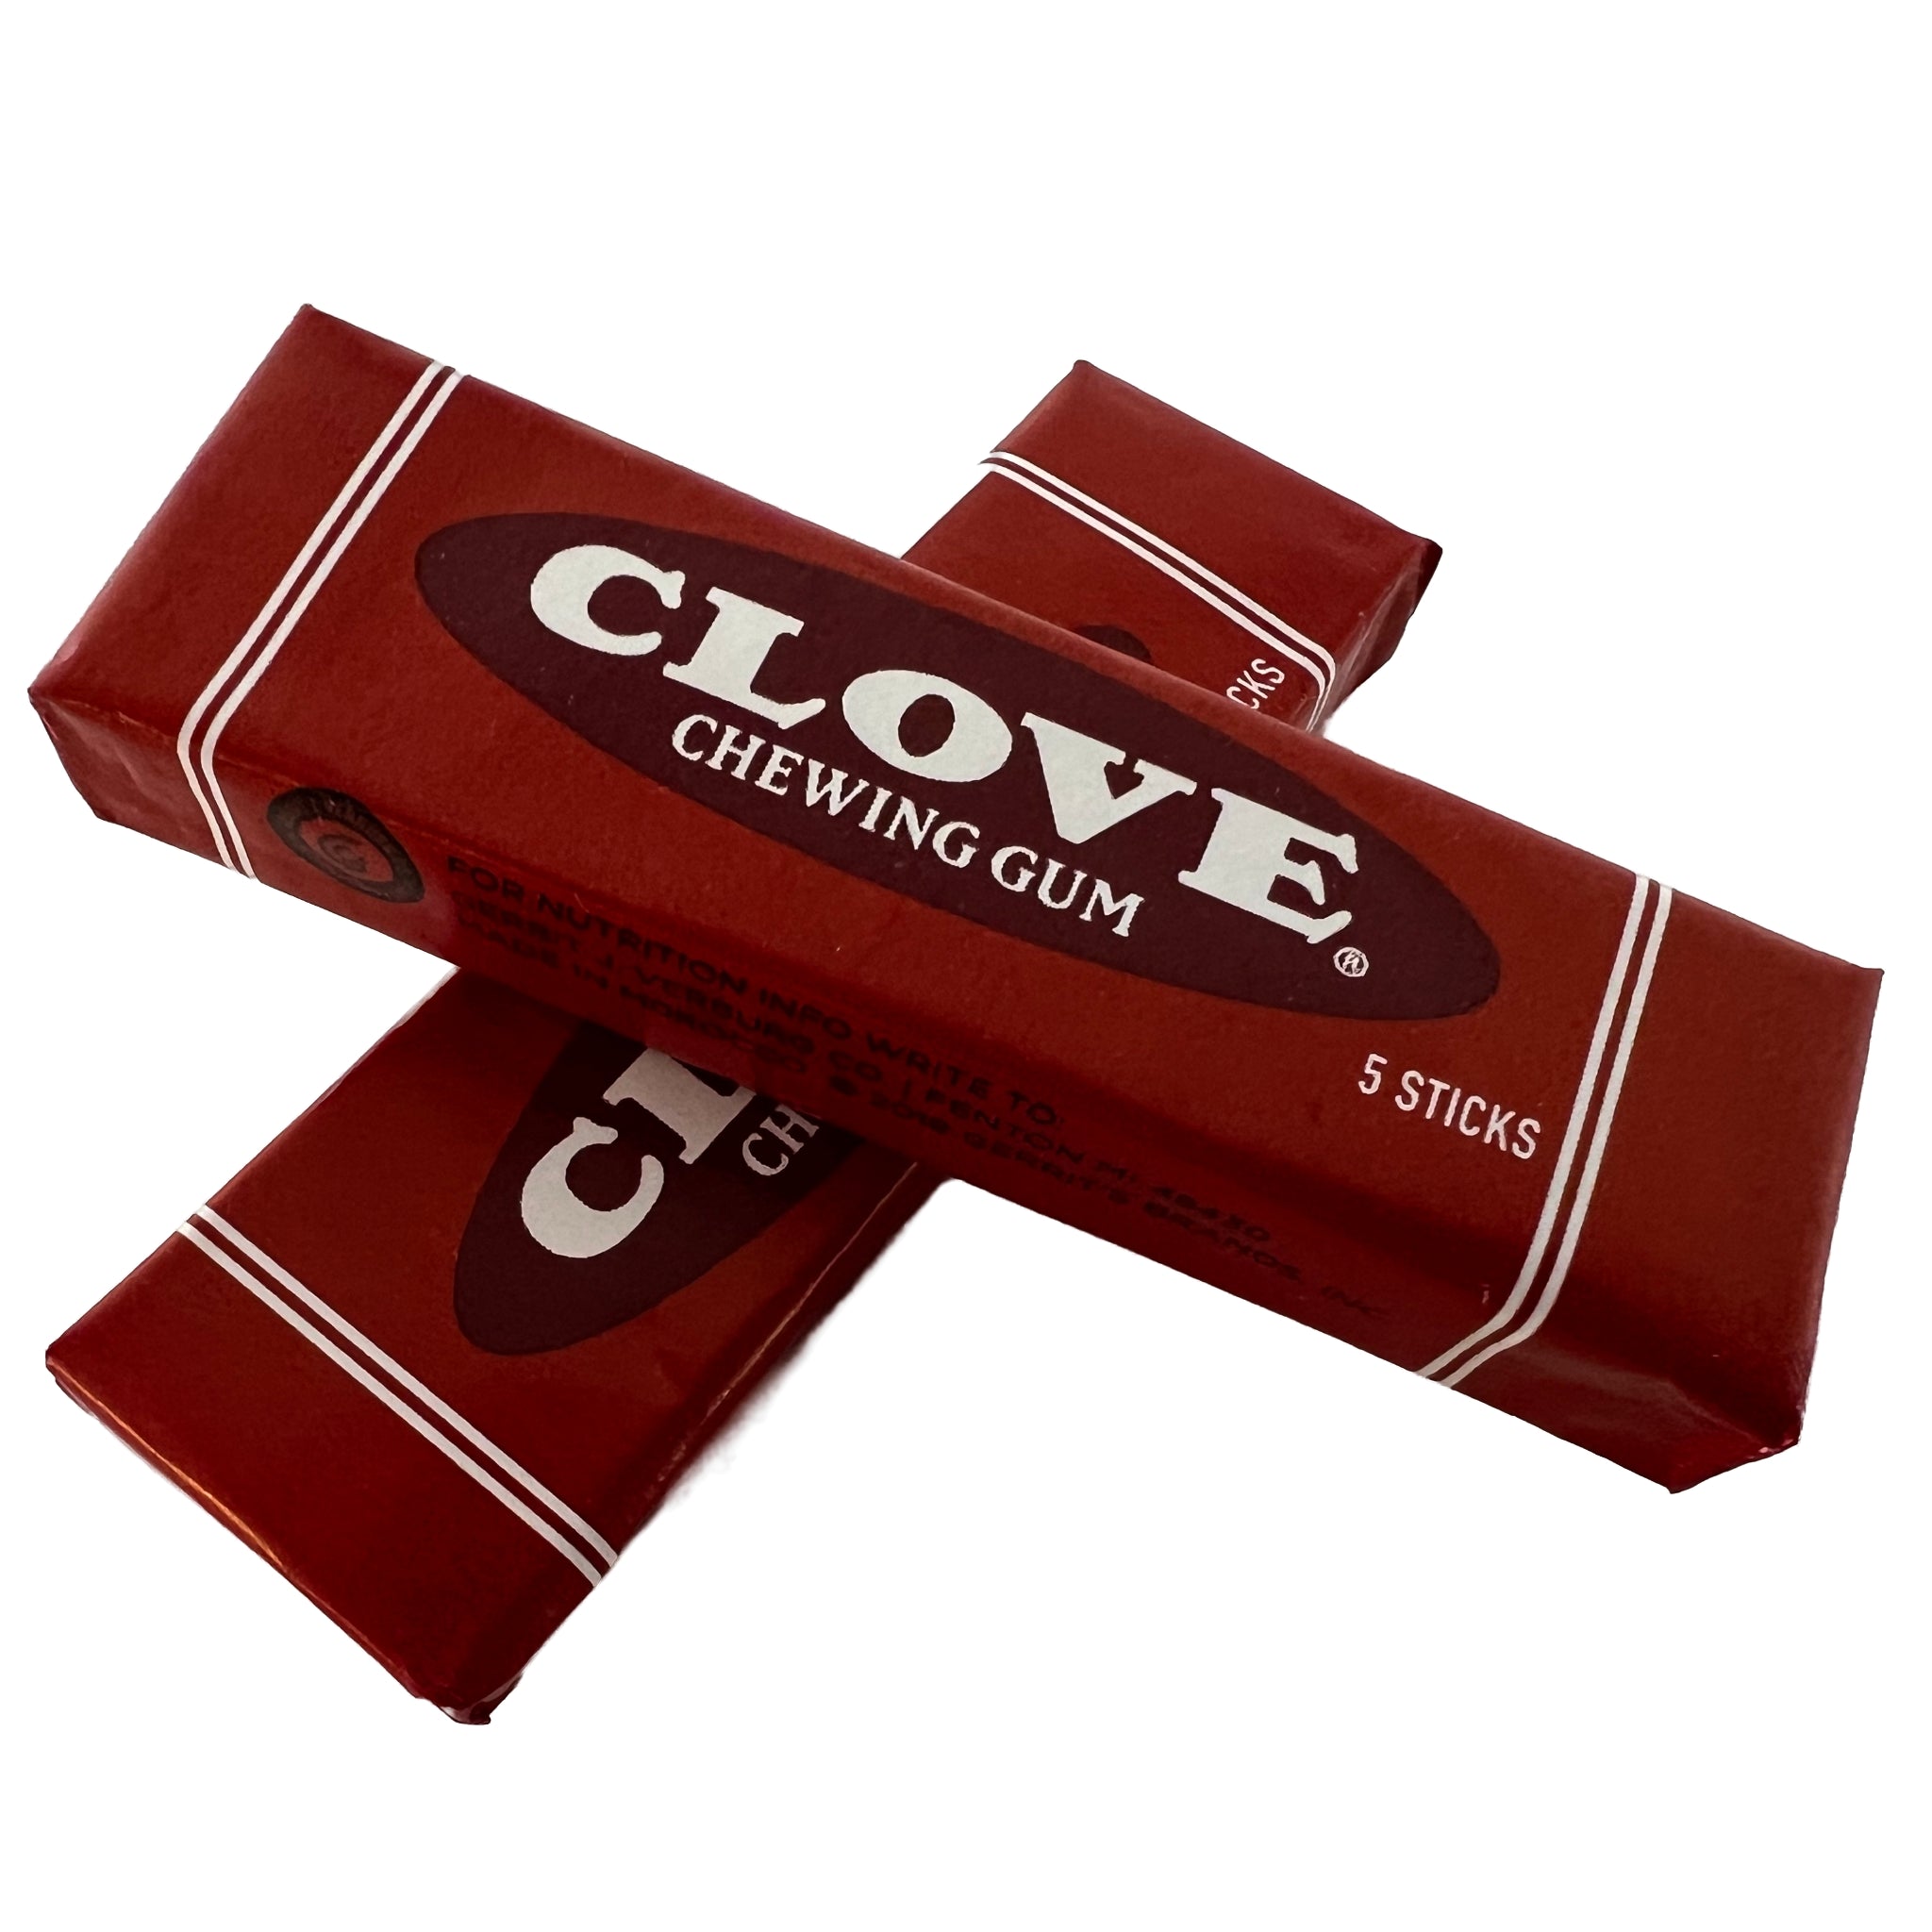 red stick chewing gum  5 sticks per package clove chewing gum 